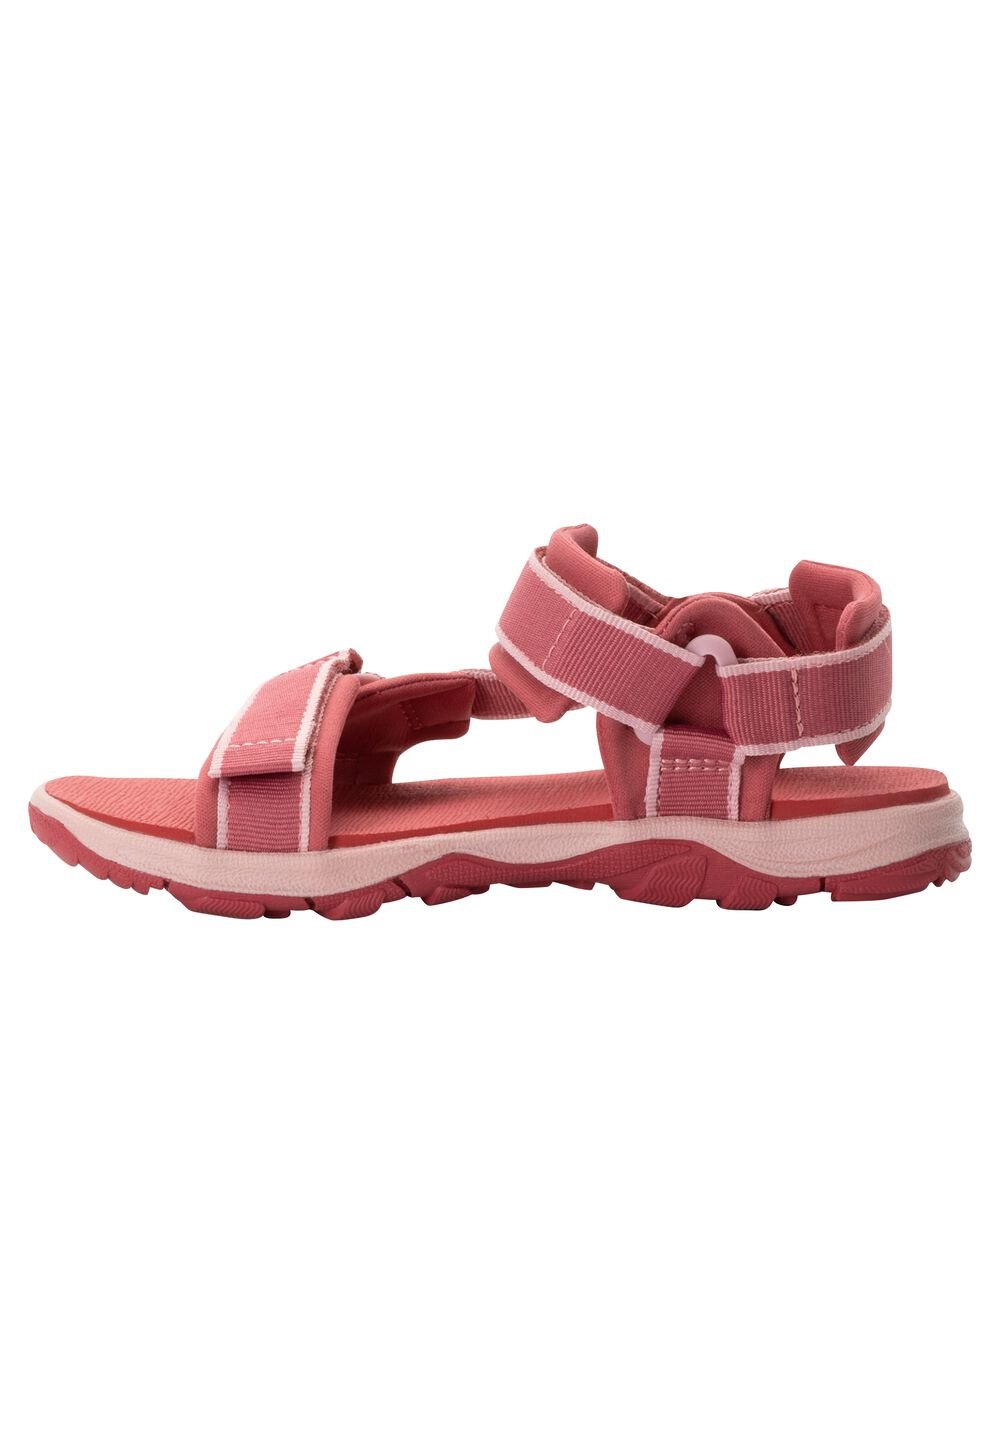 Jack Wolfskin Seven Seas 3 Kids Kinderen sandalen 27 soft pink soft pink